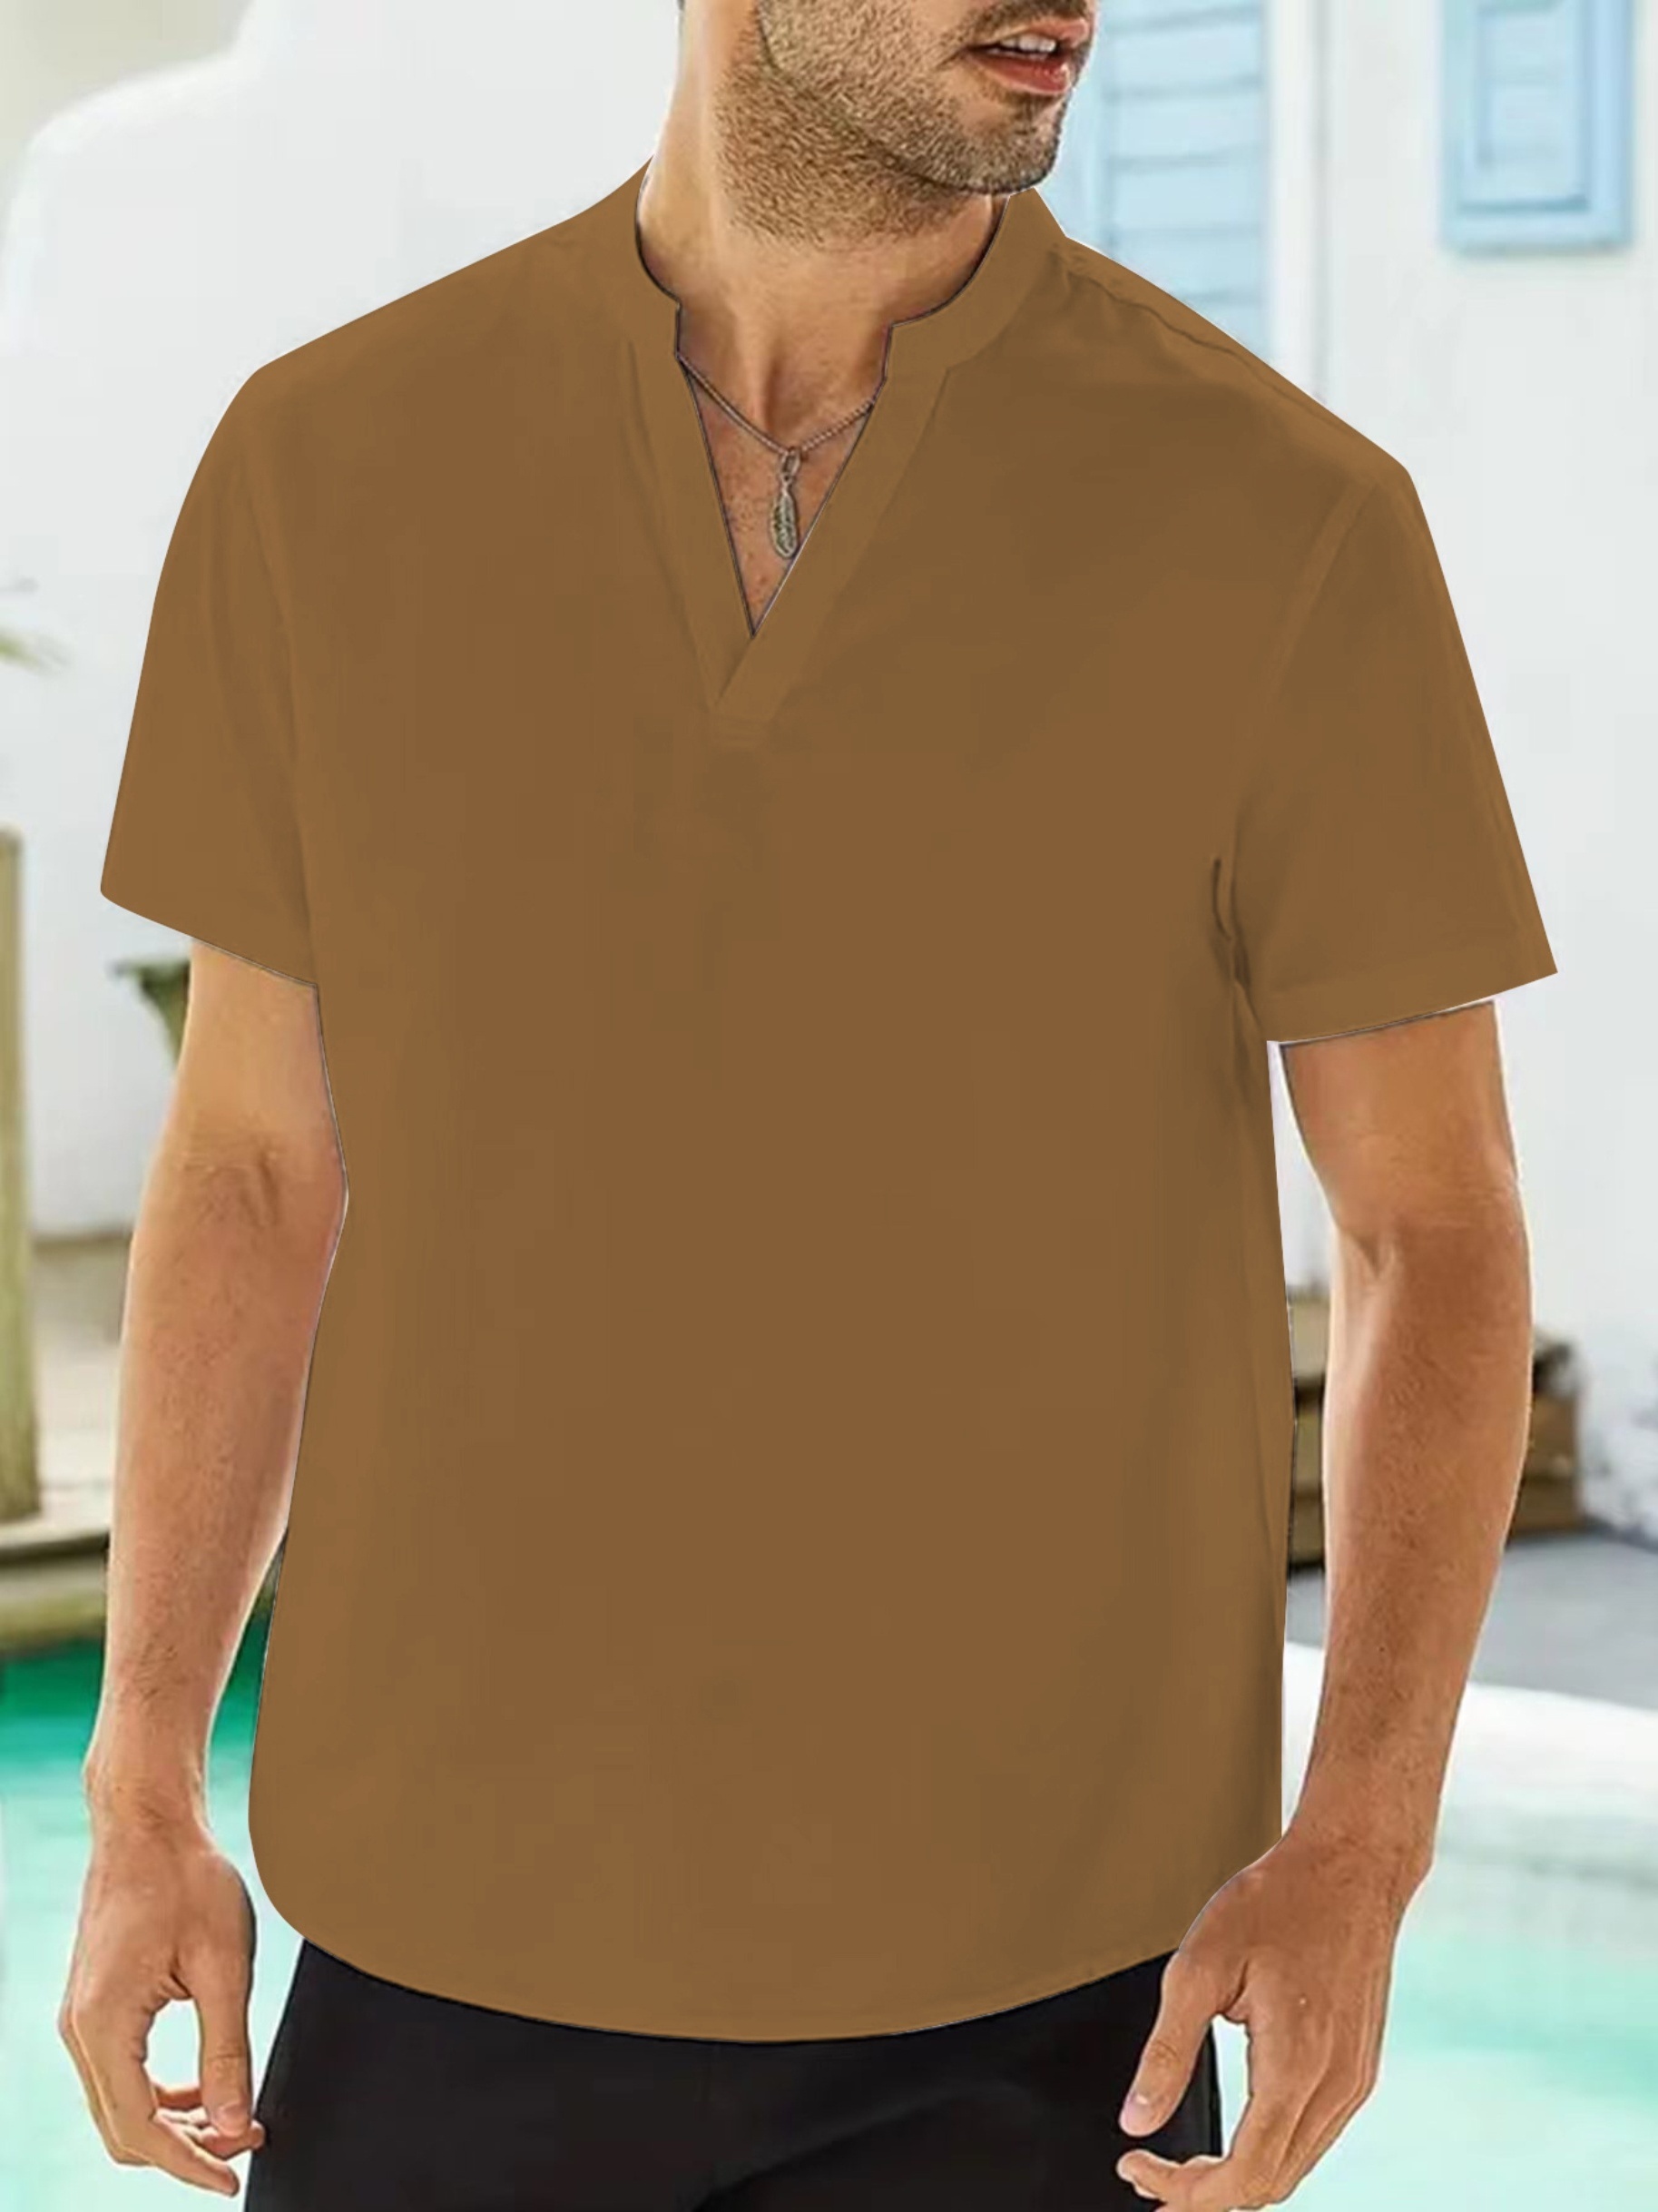 mens casual v neck short sleeve shirt mens shirt for summer vacation resort tops for men gift for men